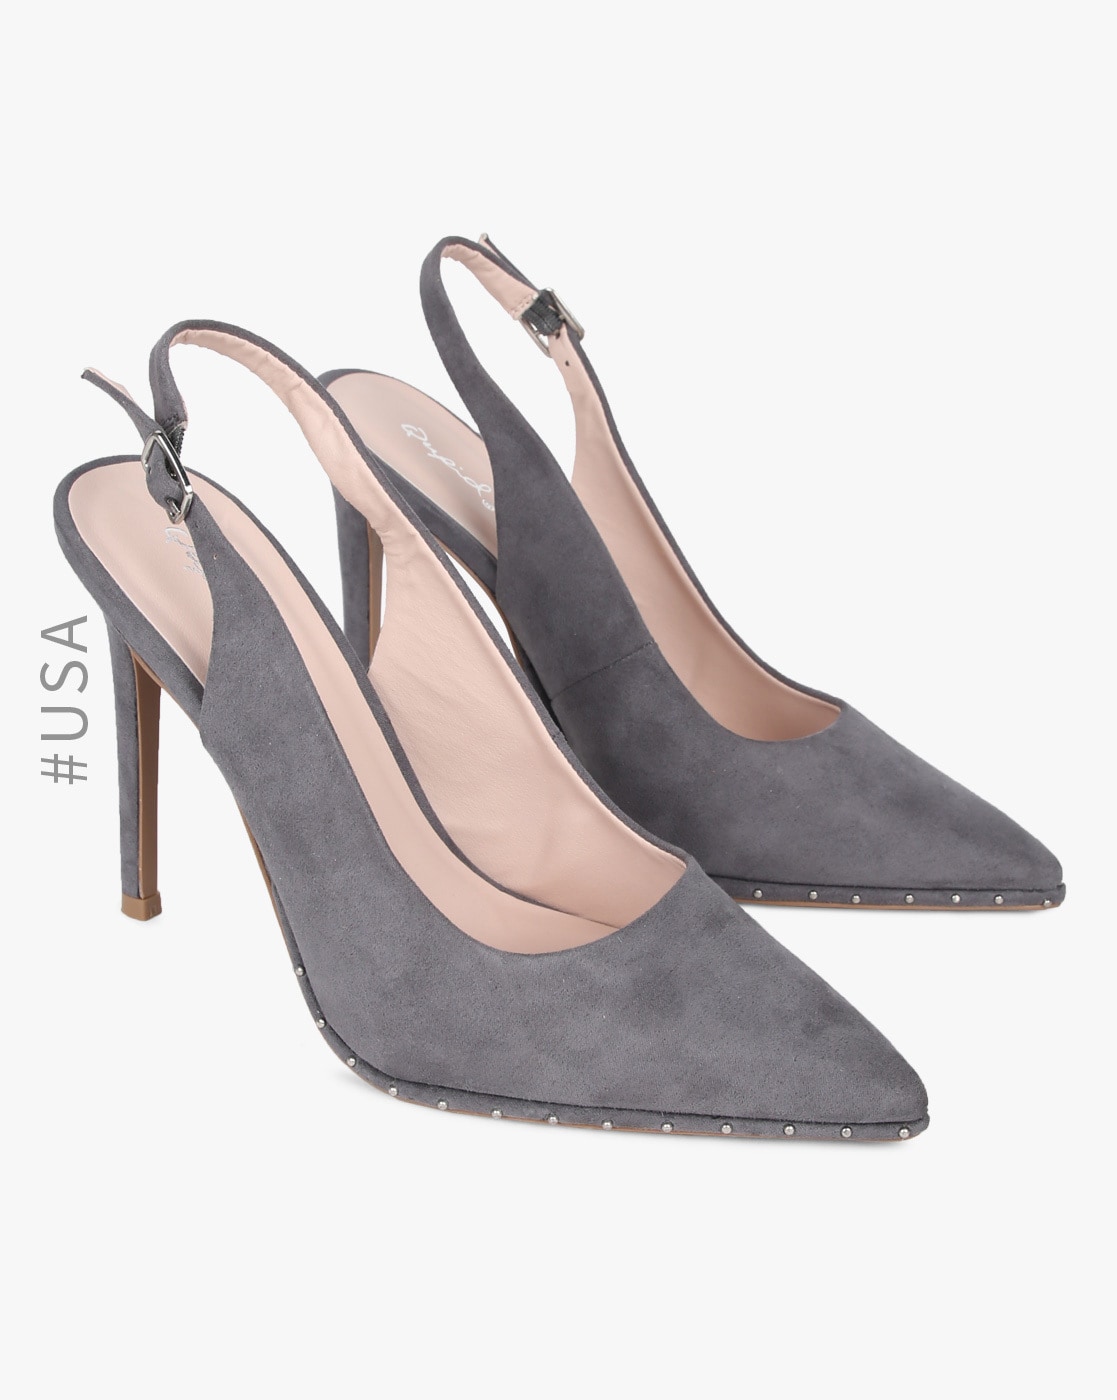 grey stilettos